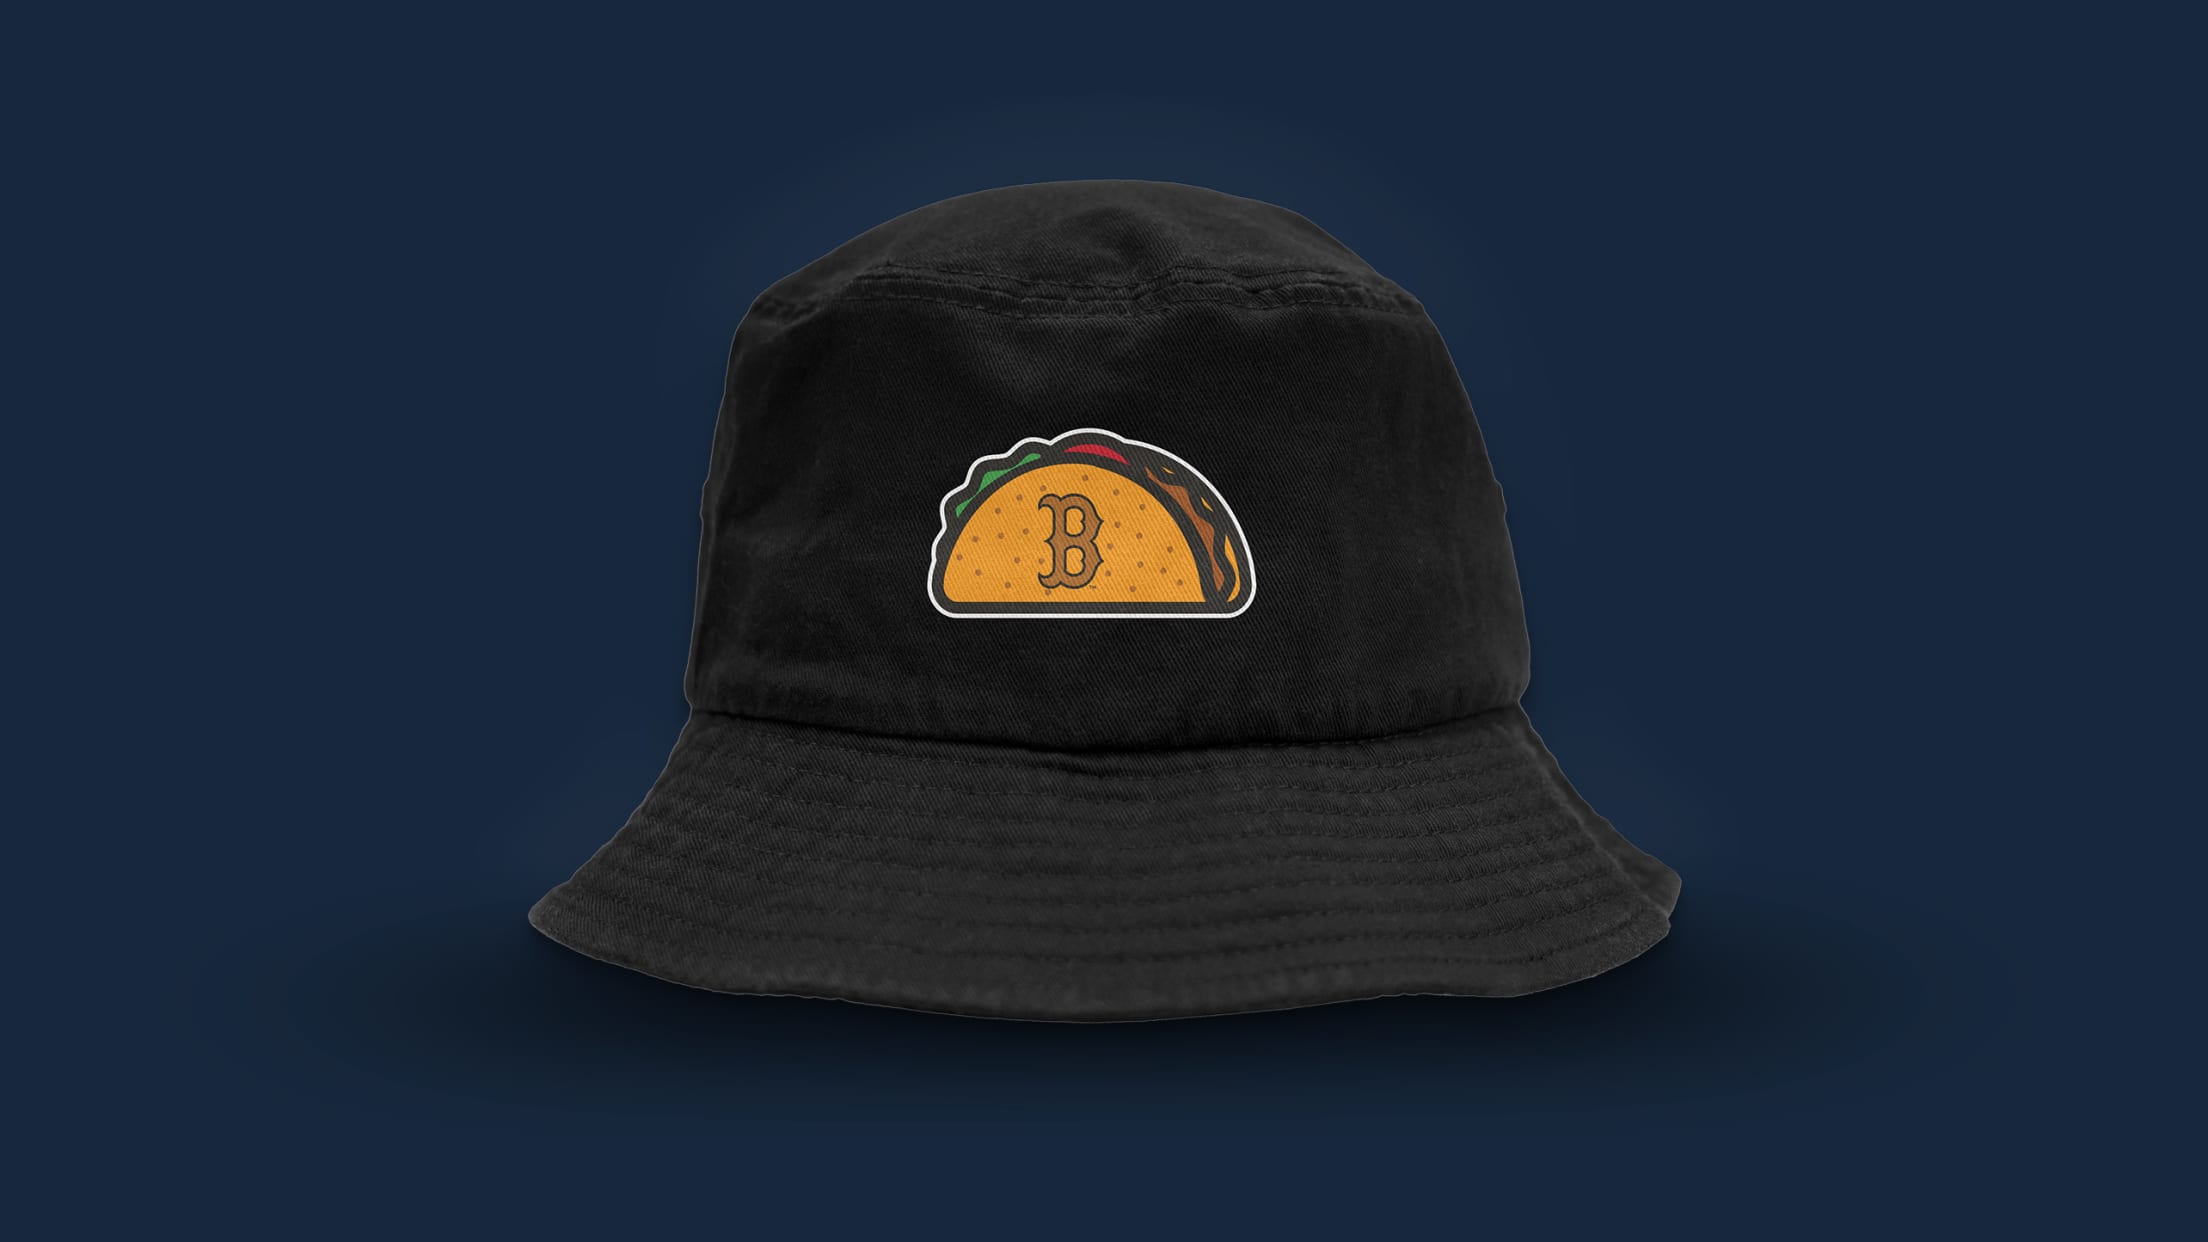 Sold at Auction: Baseball Caps, 2 Sun Fishing Hats